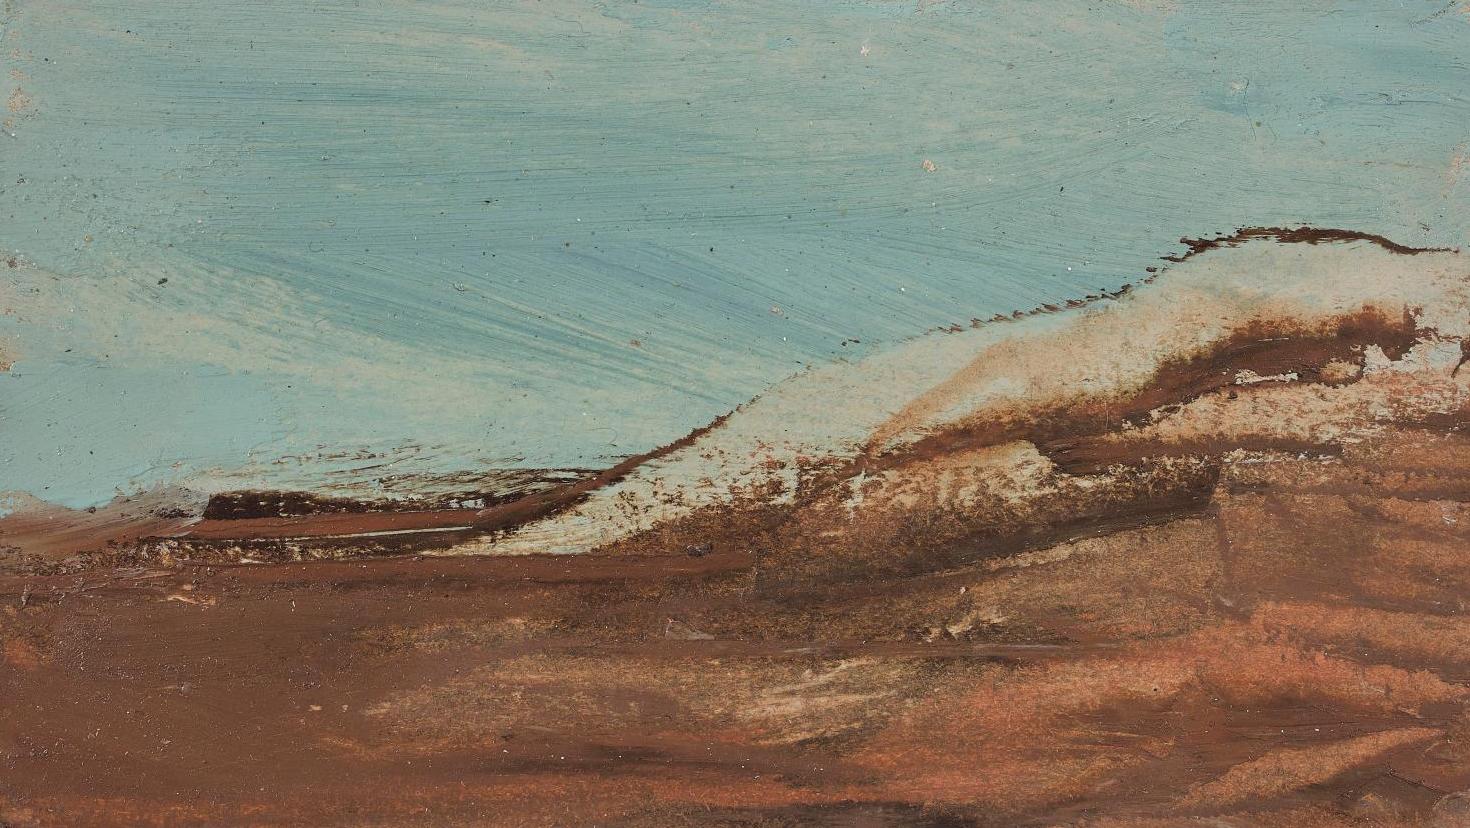 Dora Maar (1907-1997), Paysage, vers 1960, huile sur carton, 8,5 x 15 cm. Estimation... Dora Maar, de muse à artiste